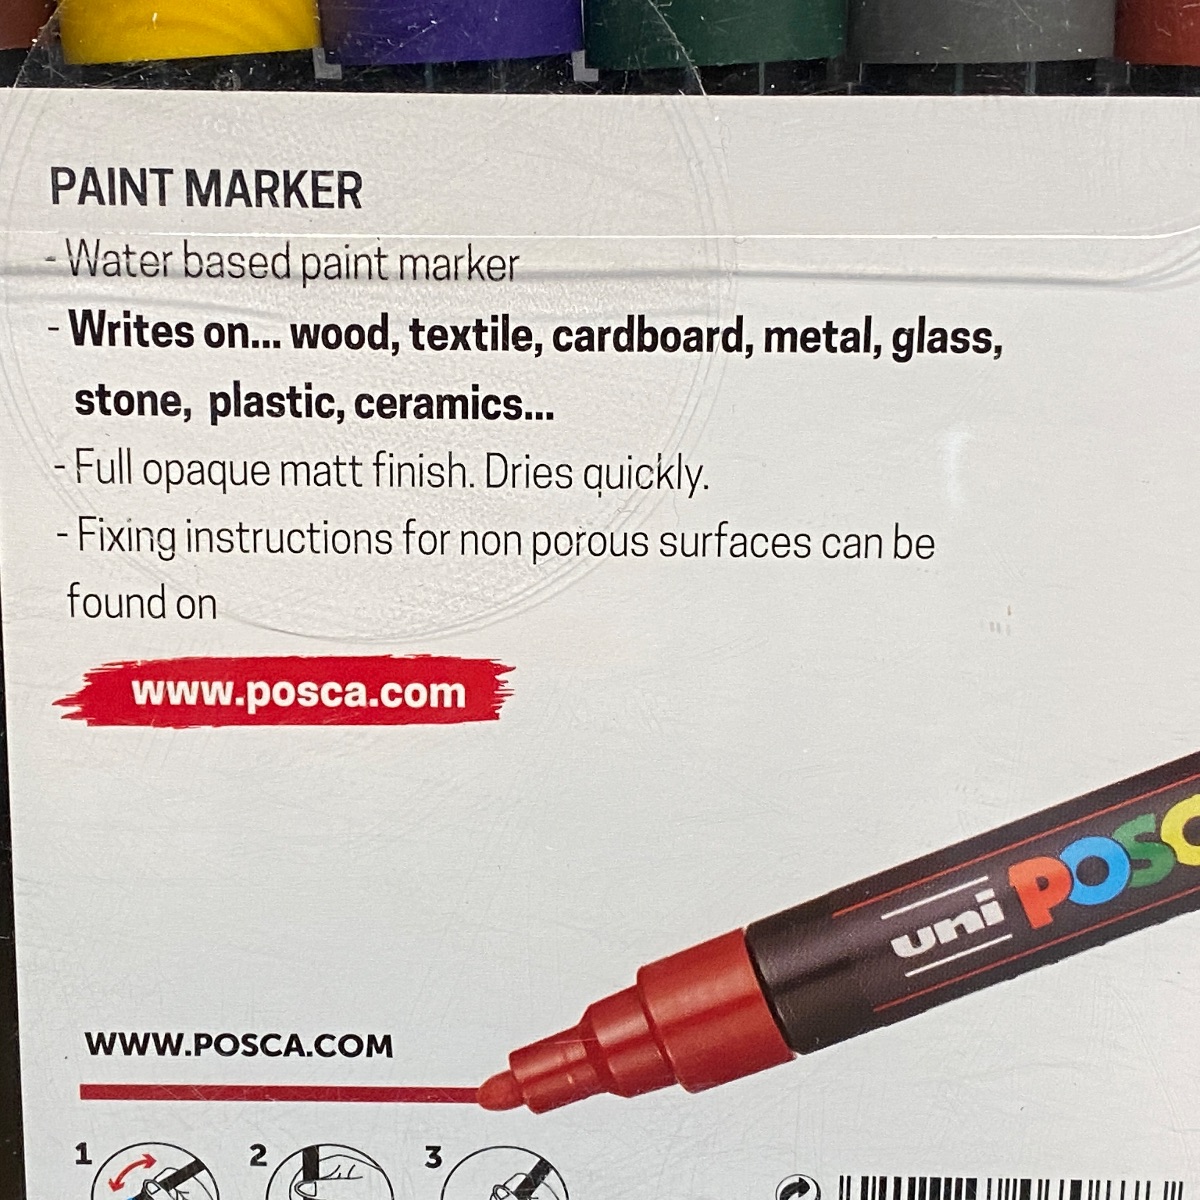 Uni Posca Paint Markers Pens Art Fine Medium Tip Deep Colours PC-5M (Set of 8) PC-5M 5012788070873 (Brand New)